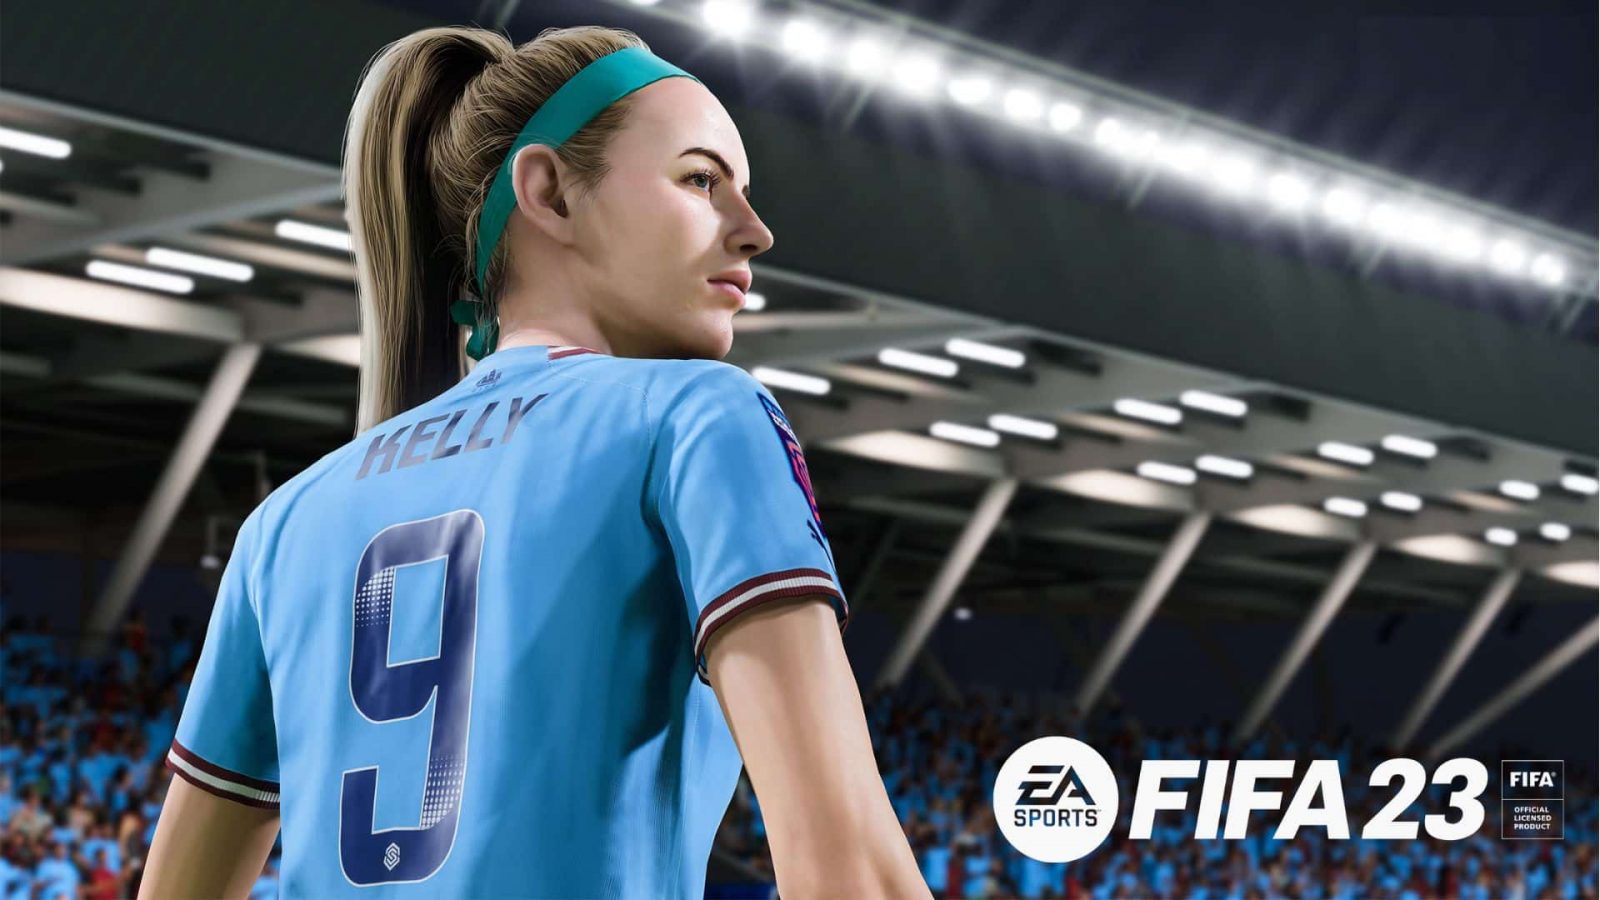 Is FIFA 23 cross-platform? Ultimate Team crossplay on Playstation, Xbox & PC